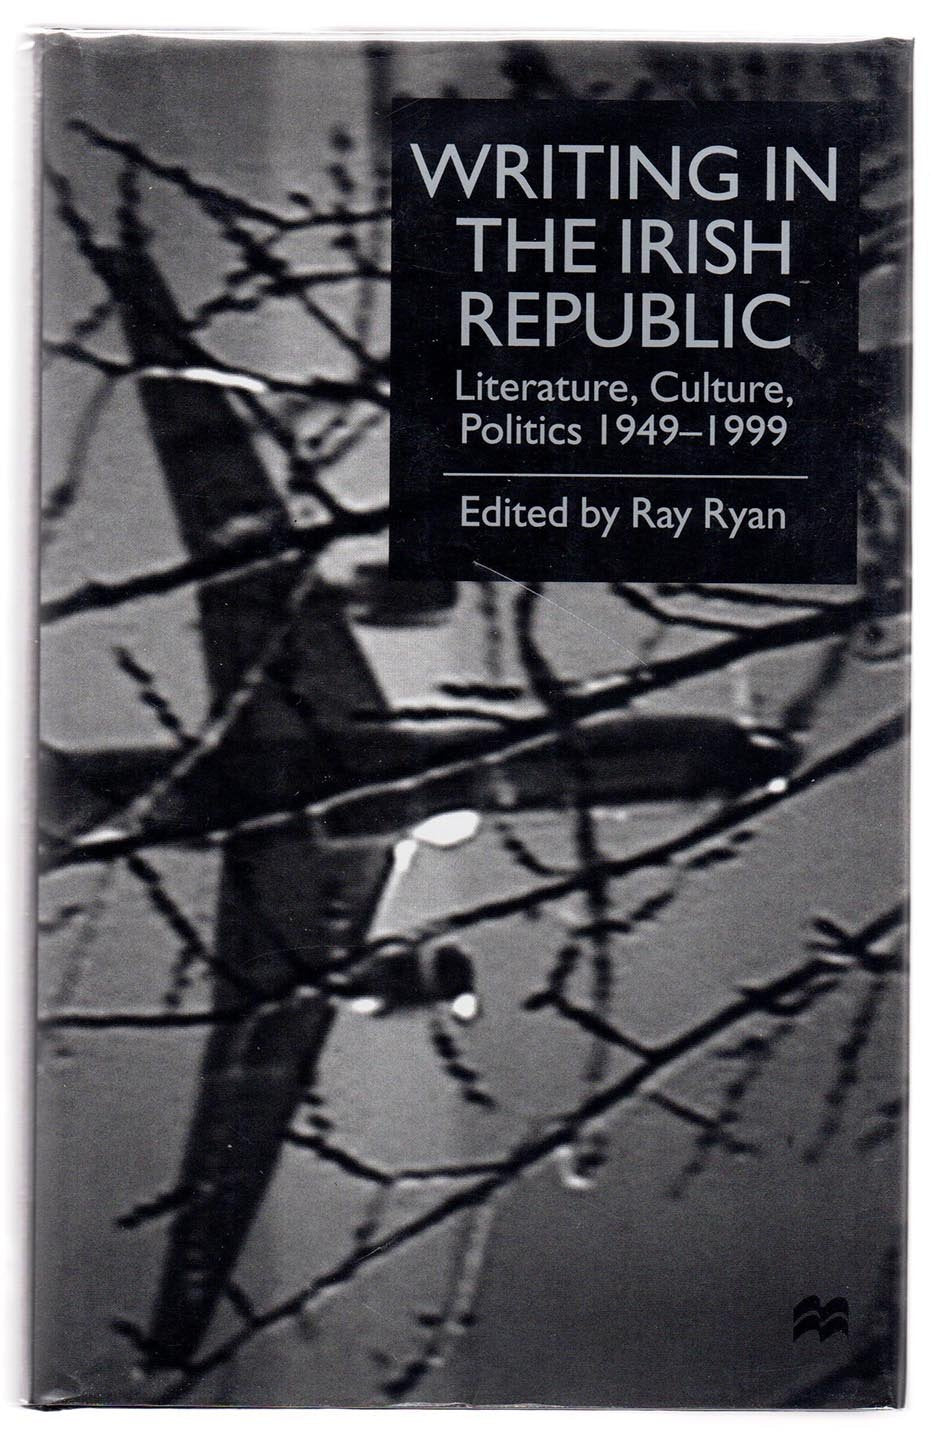 Writing in the Irish Republic: Literature, Culture, Politics 1949-1999